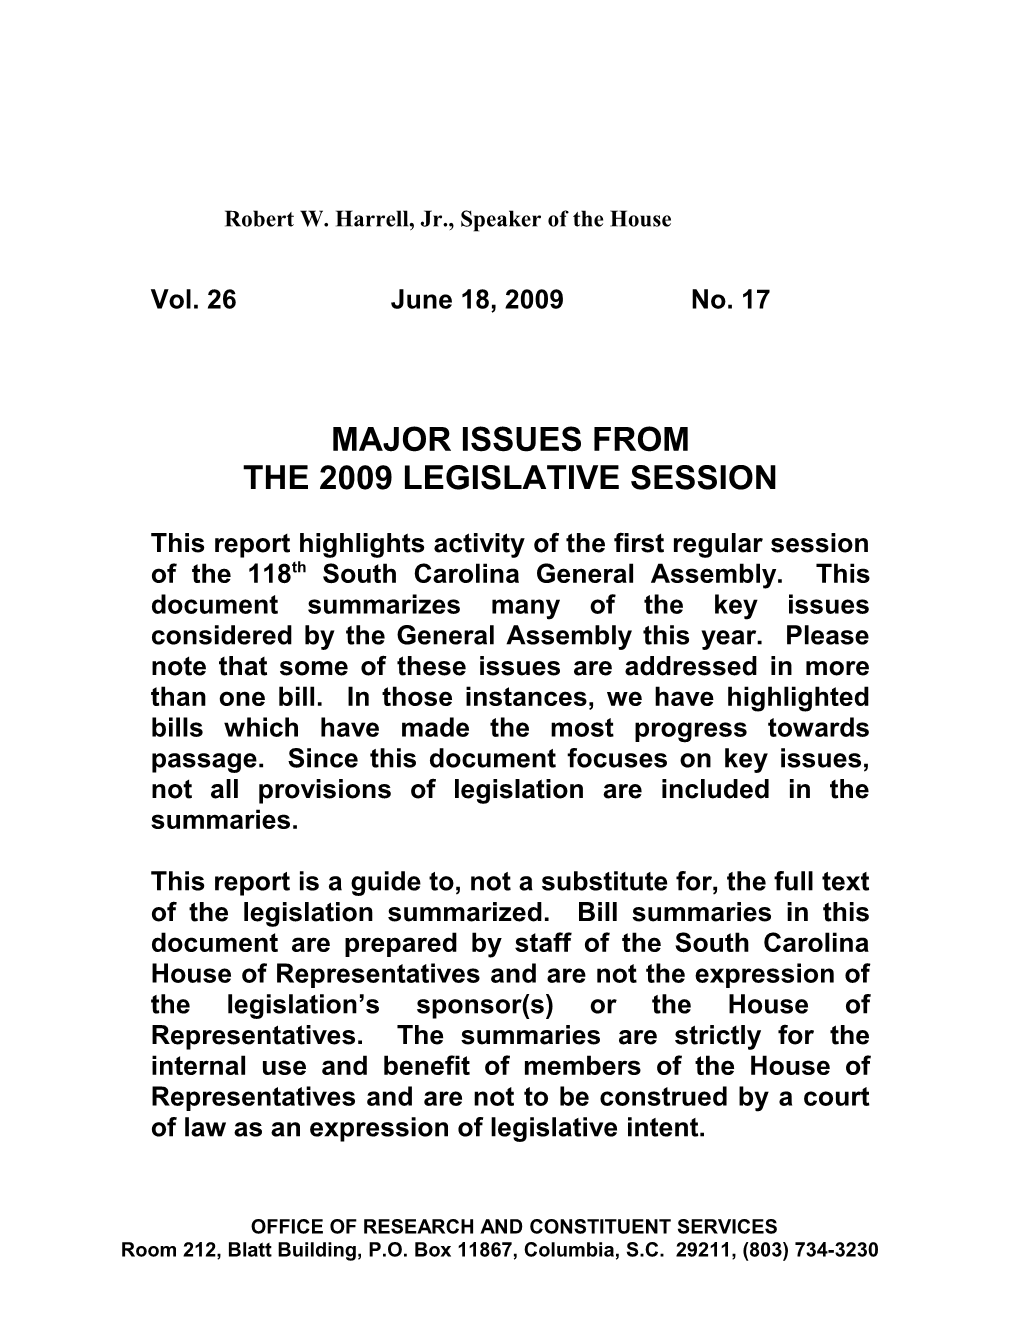 Legislative Update - Vol. 26 No. 17 June 18, 2009 - South Carolina Legislature Online